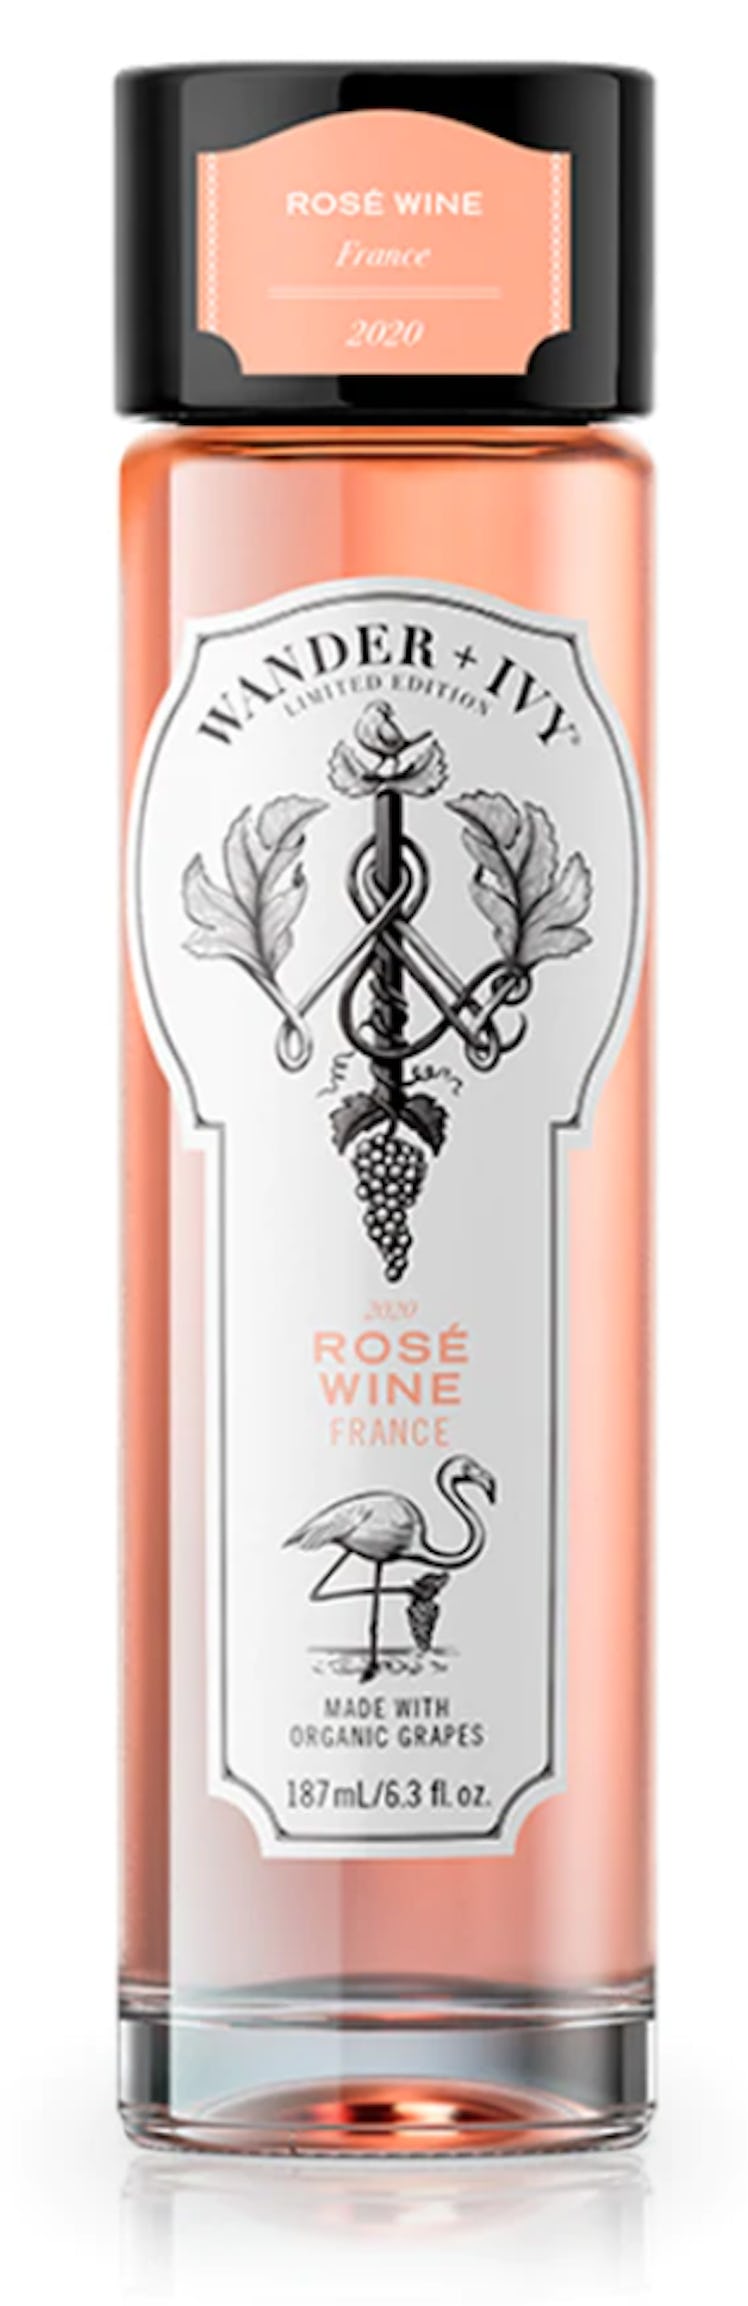 Limited Edition Rosé